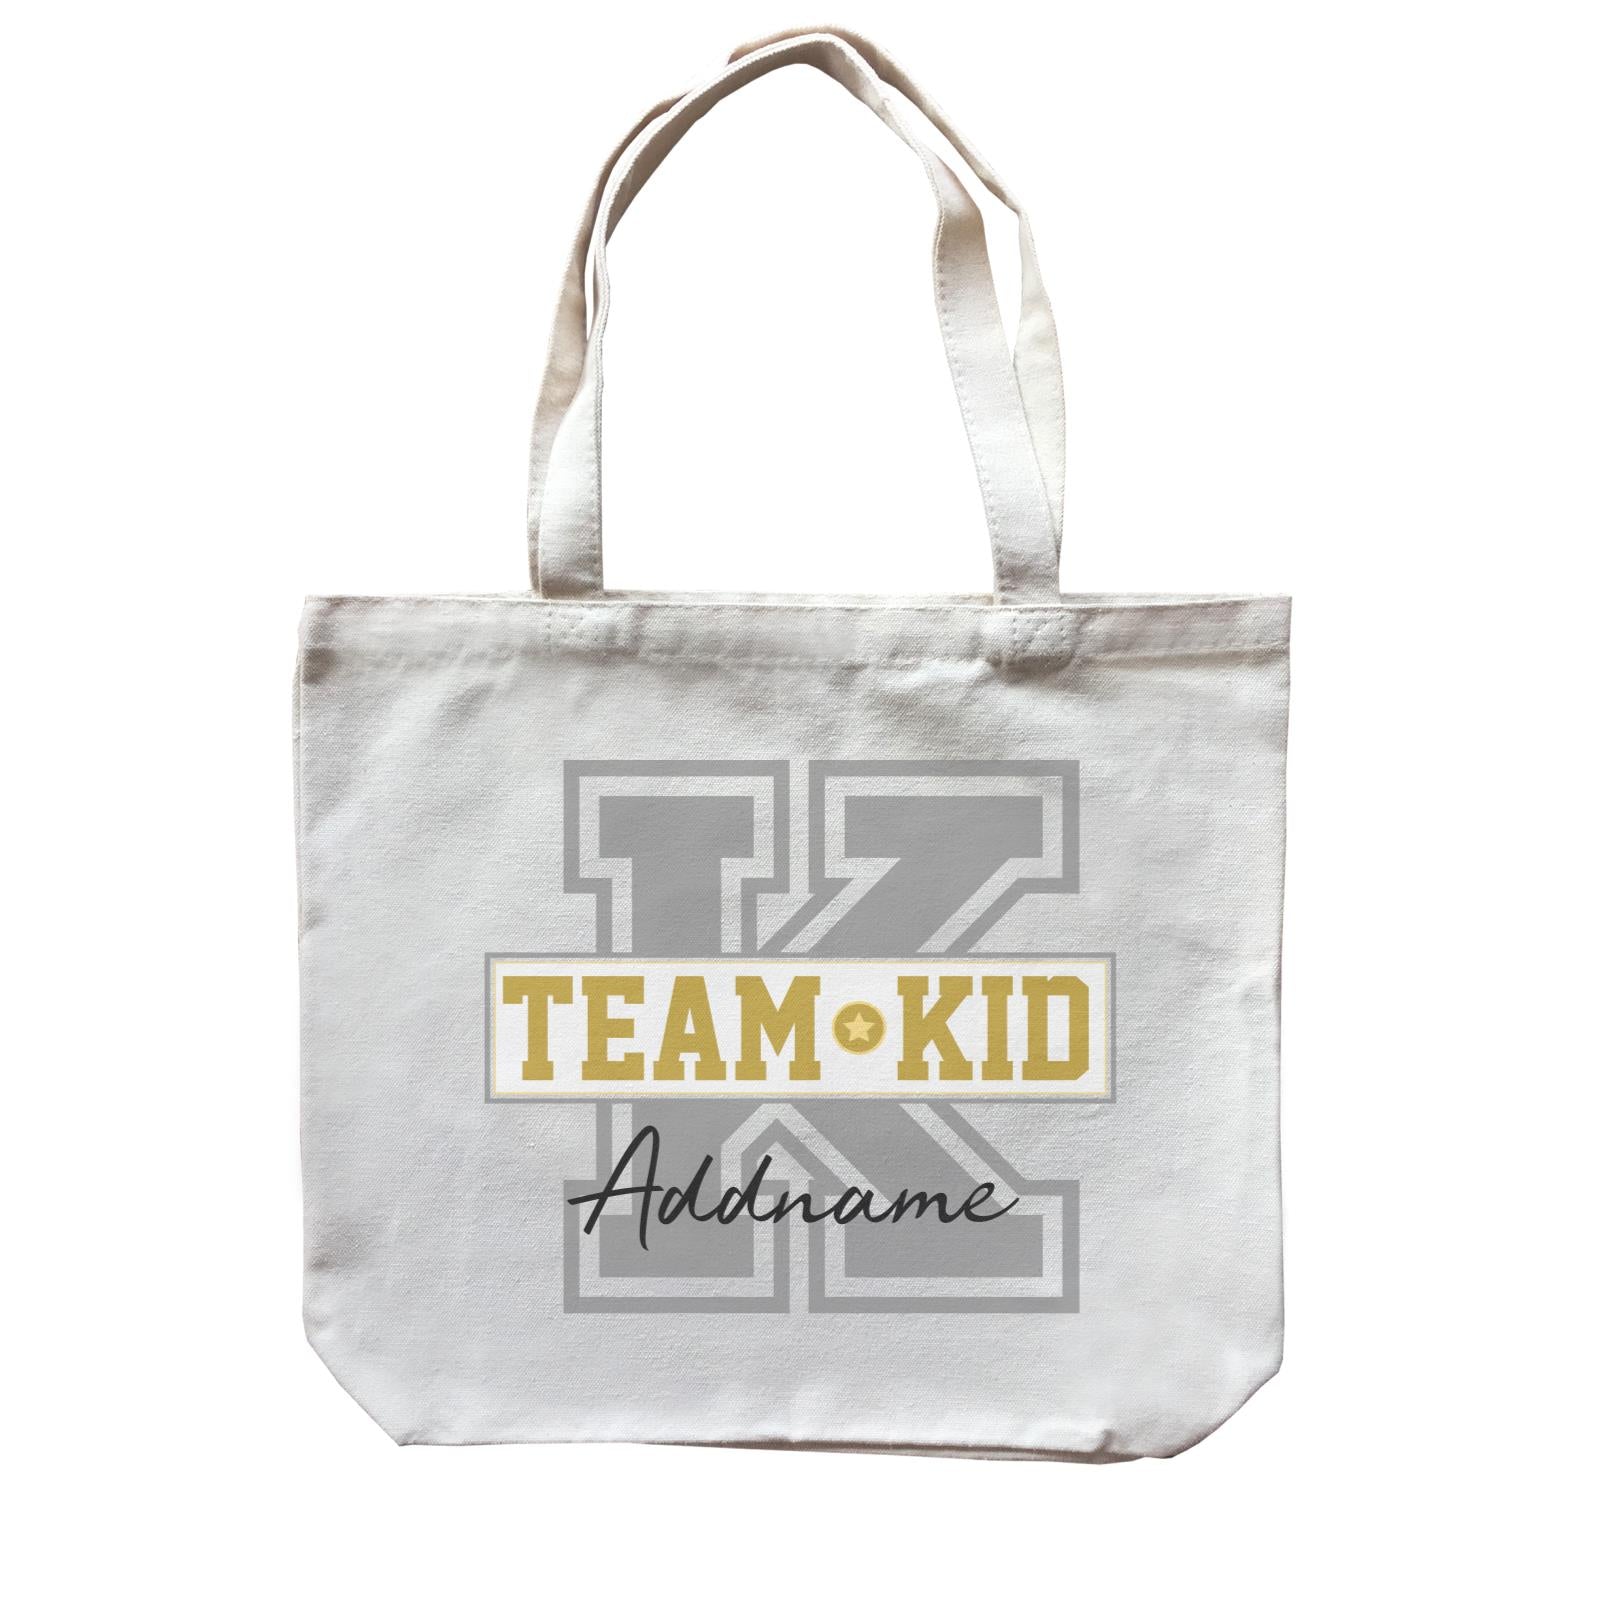 Team Kid Addname Canvas Bag